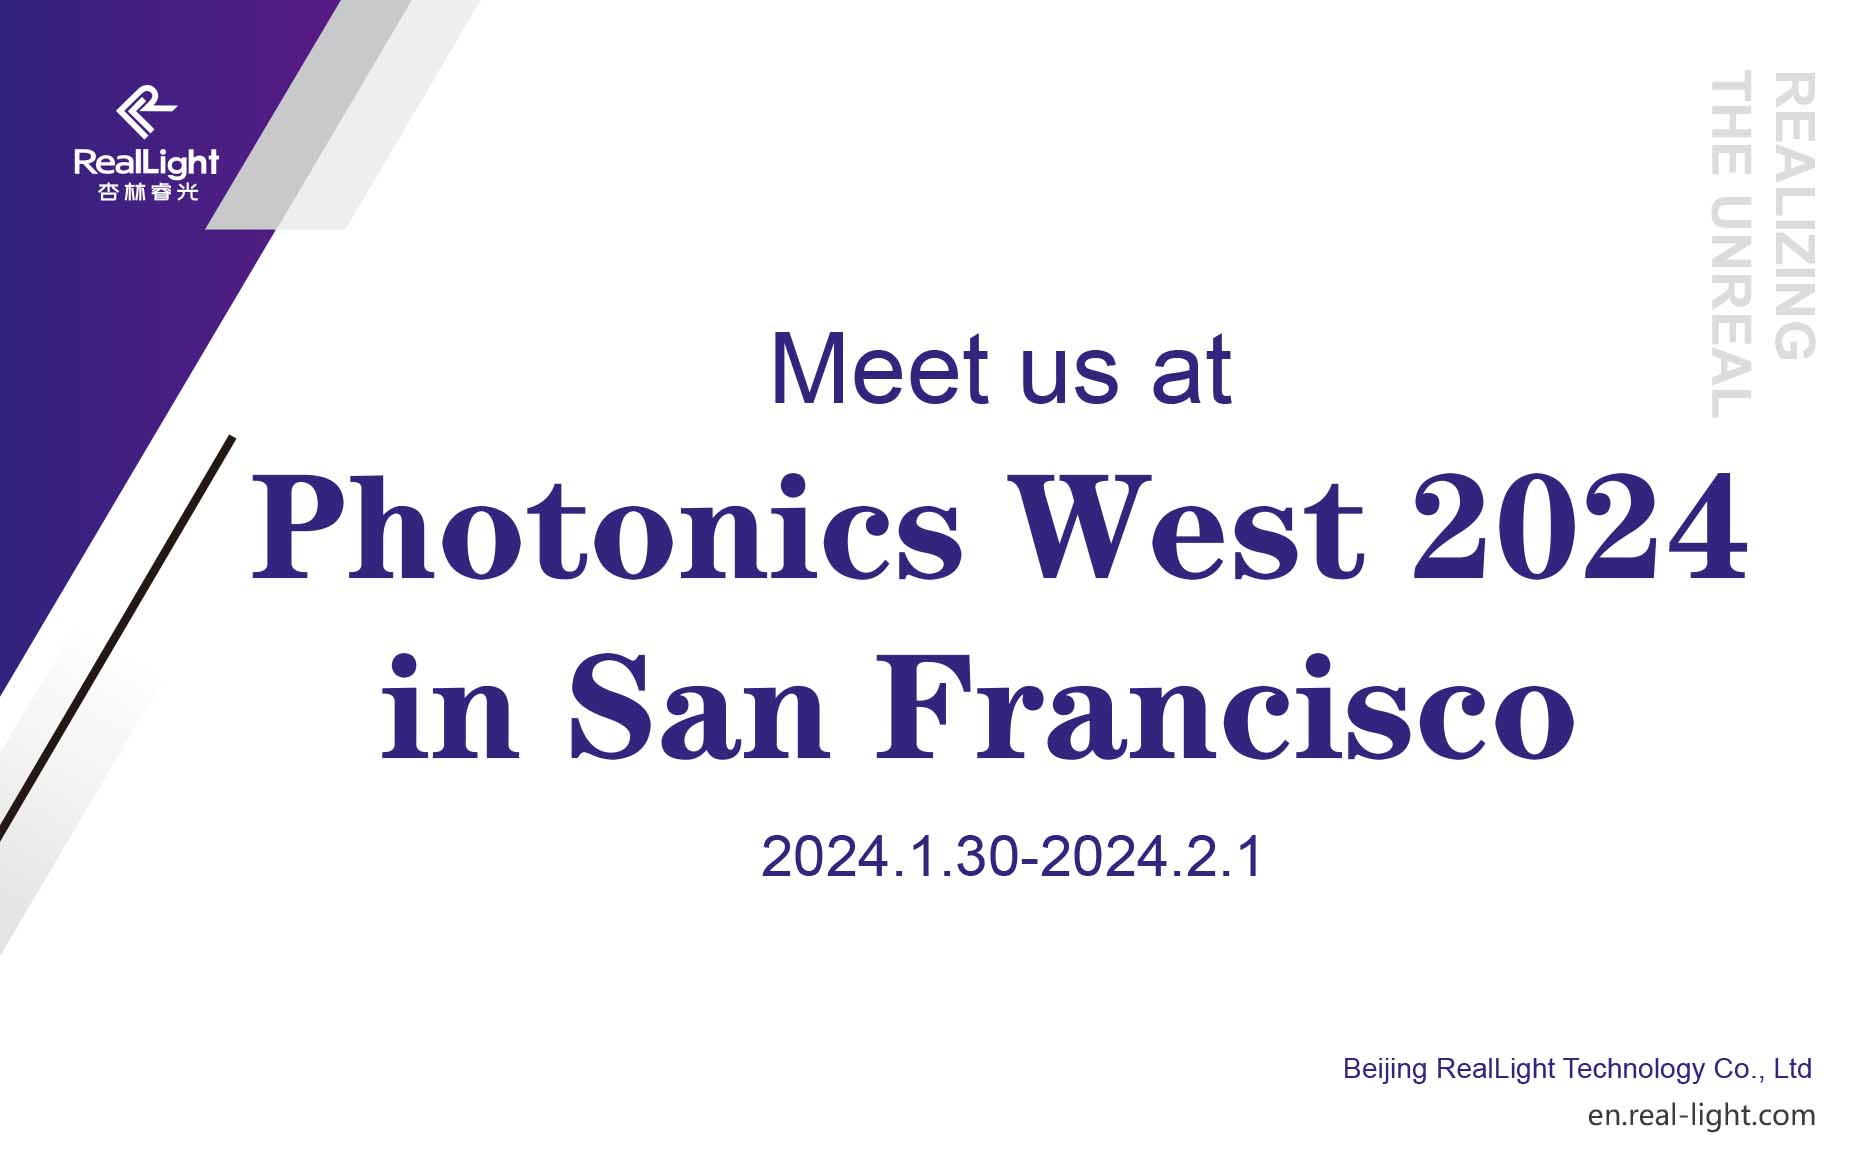 Meet us at Photonics West 2024 in San Francisco